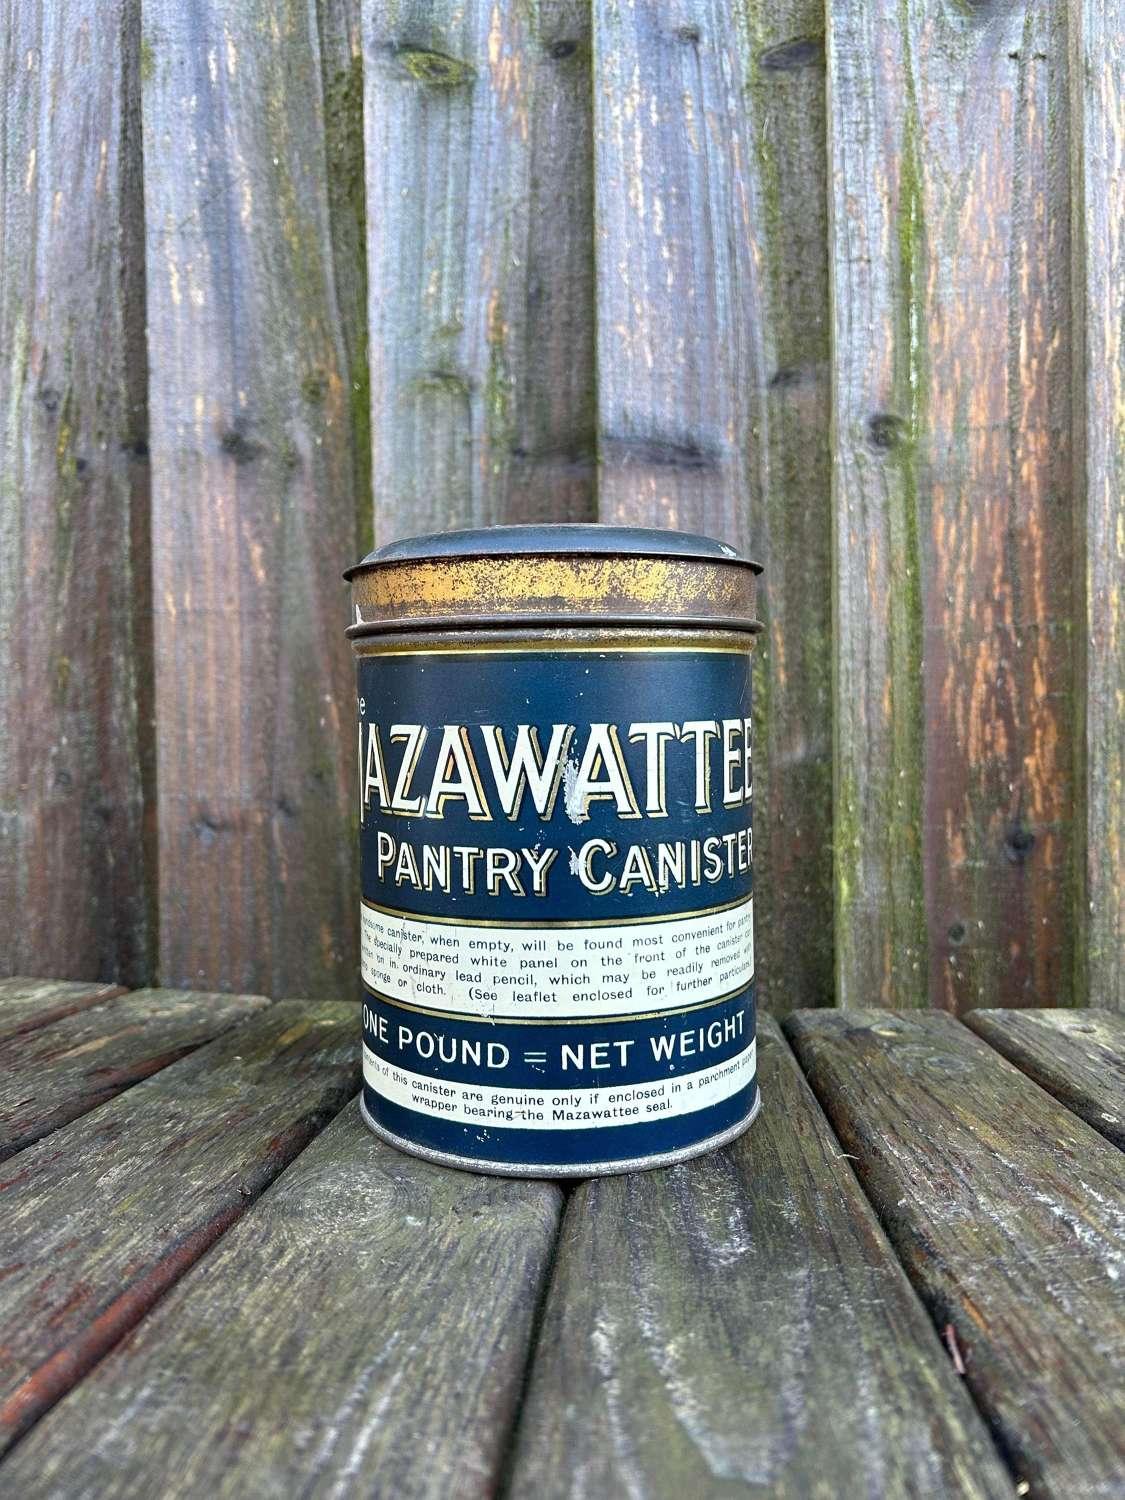 Unusual Mazawattee tea canister